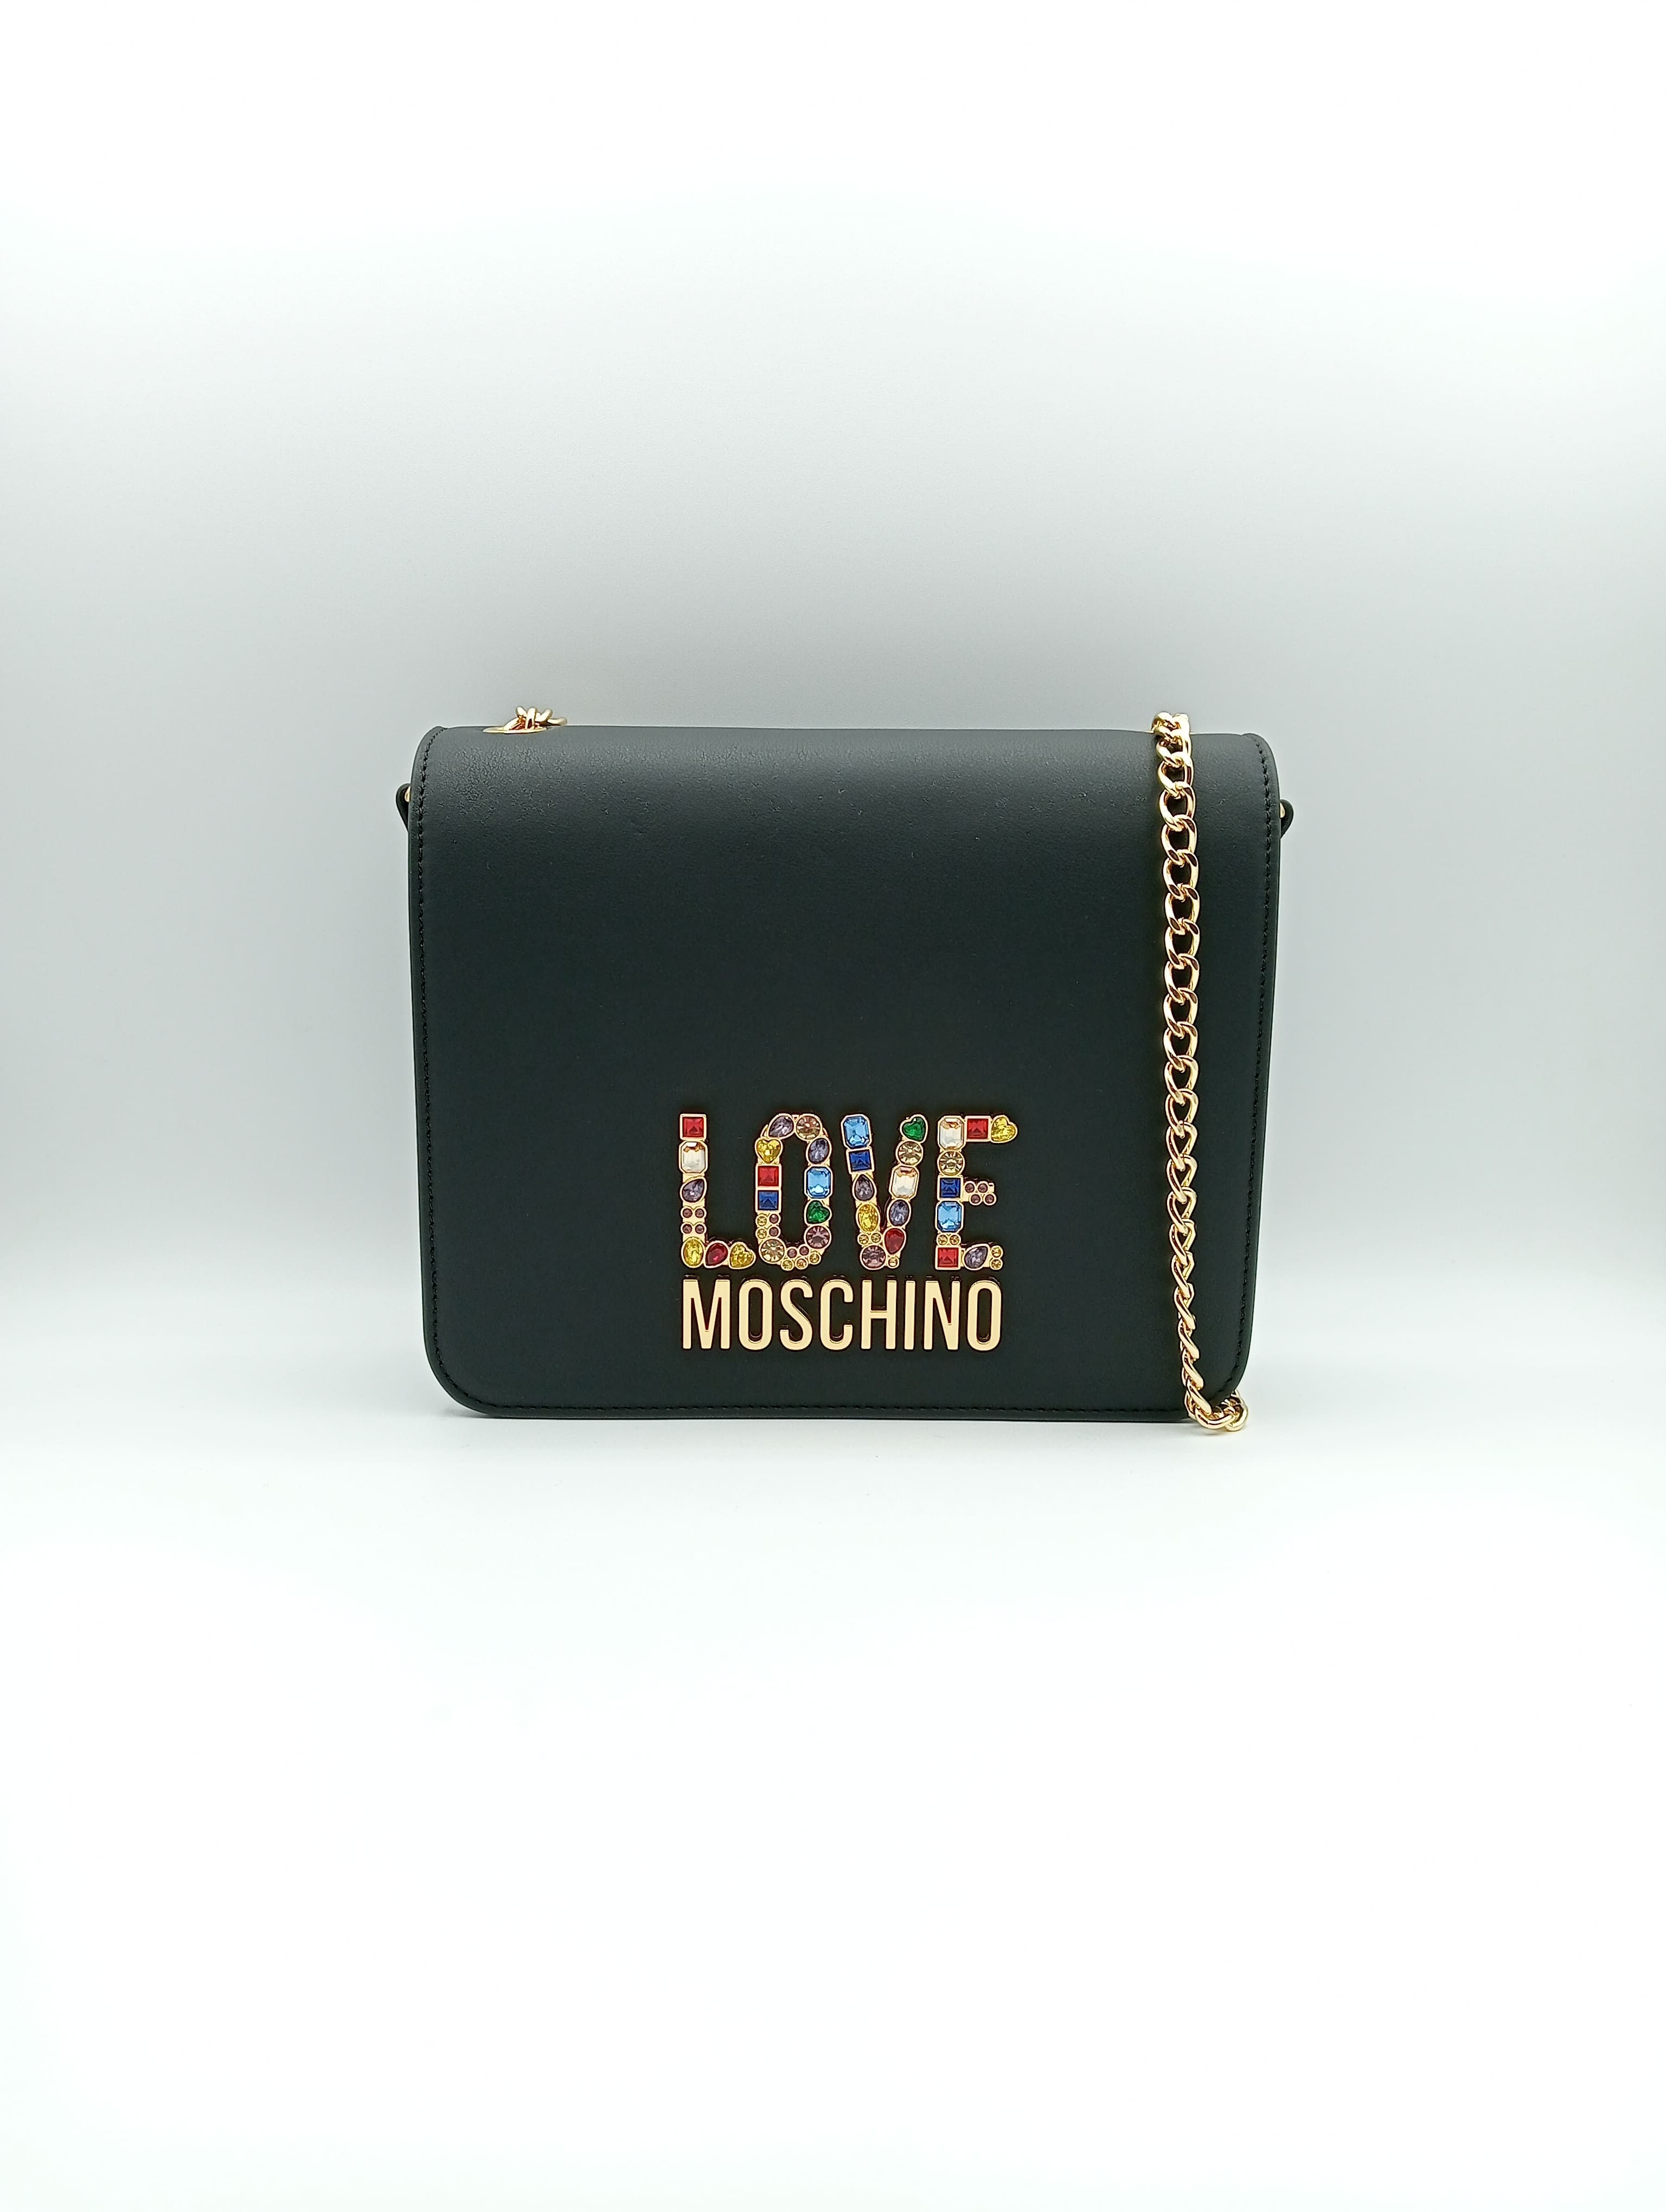 Borsa a spalla Love Moschino